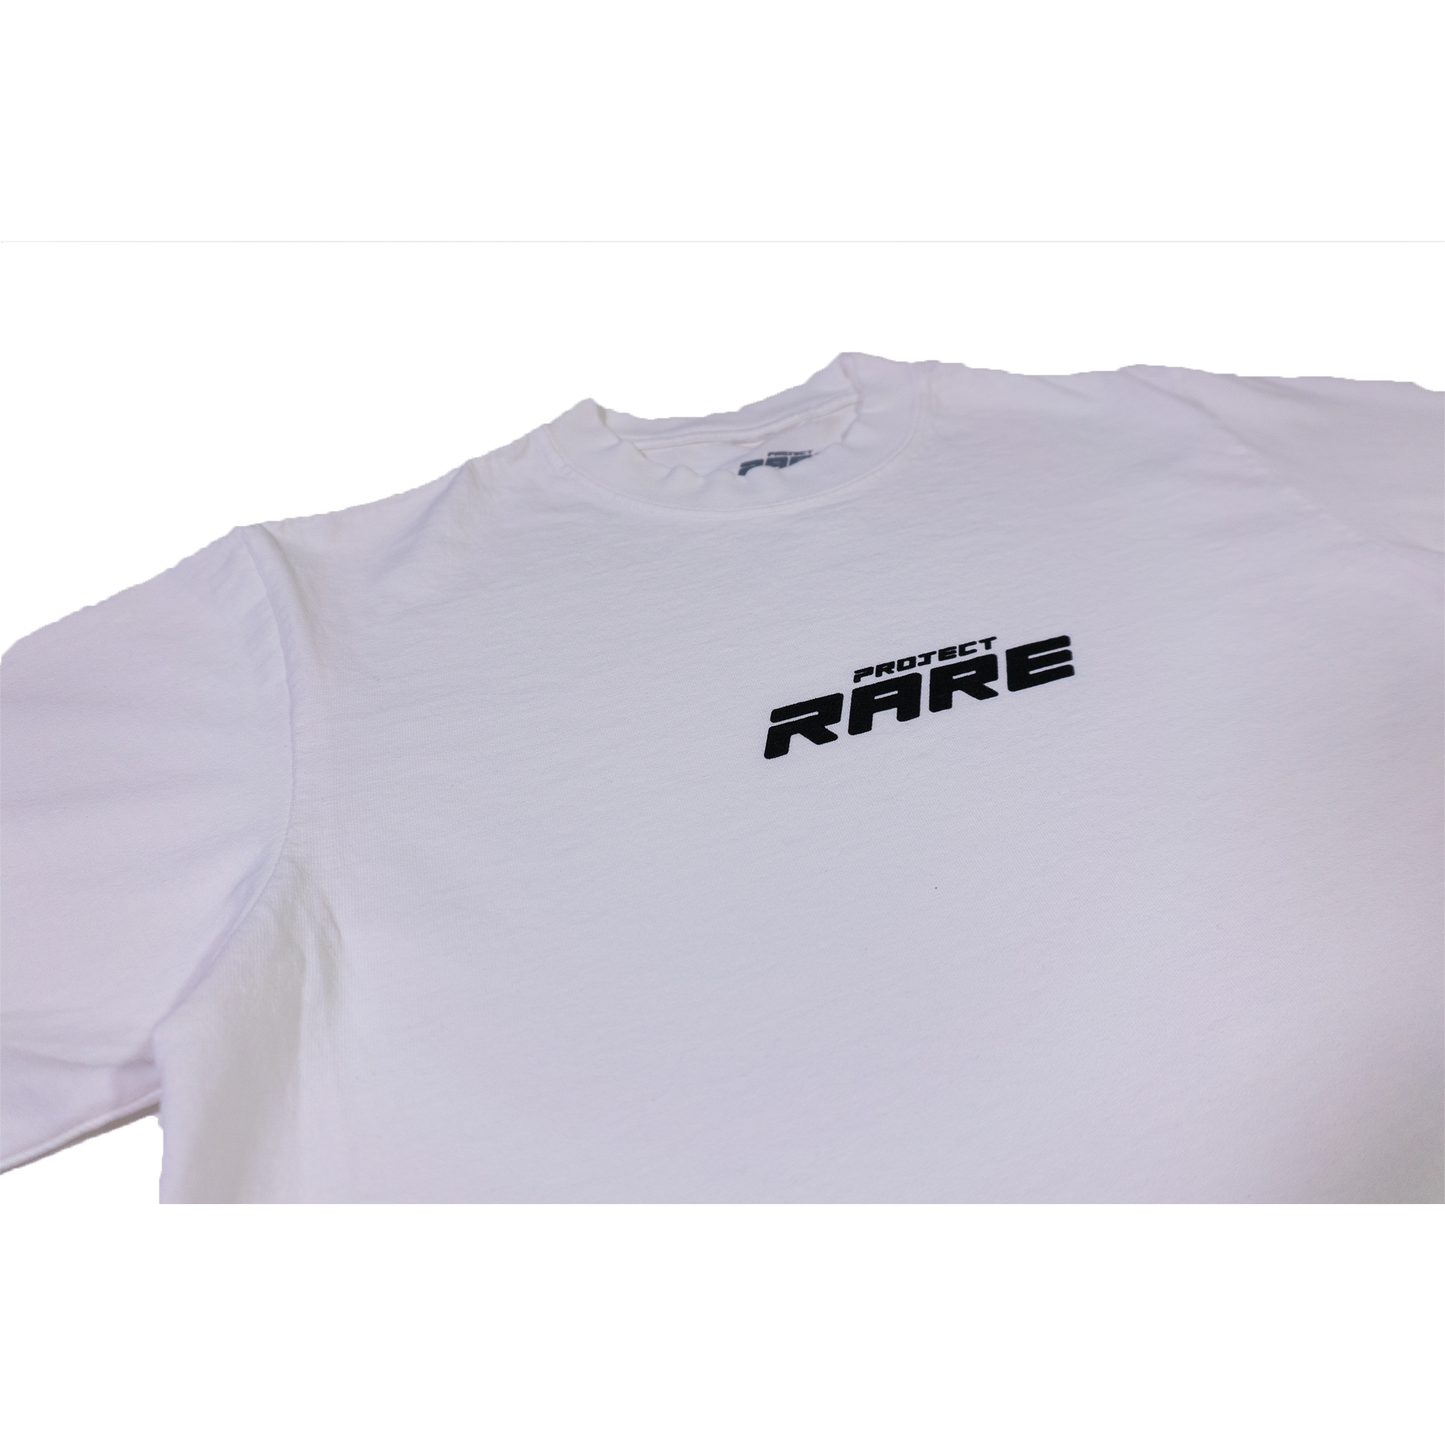 Genesis Logo Shirt White Project Rare 